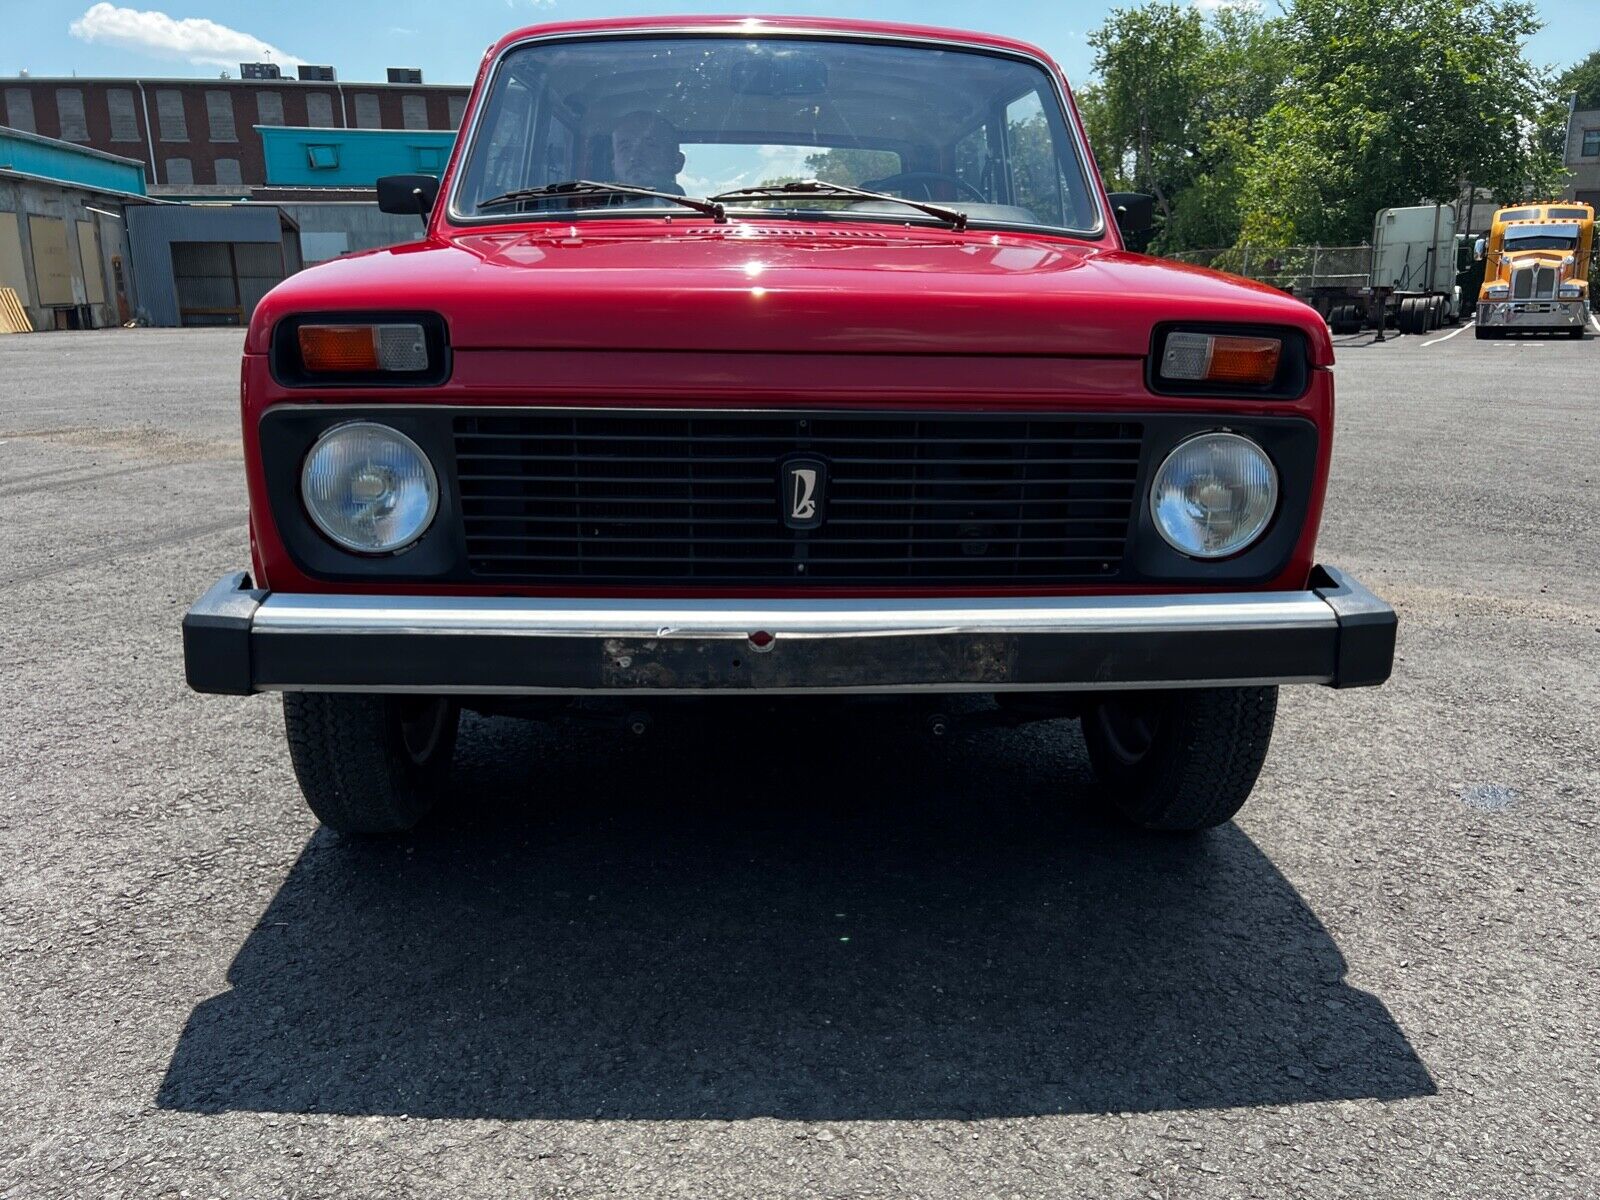 Lada Niva: A Soviet Era Legend on American Soil -  Motors Blog